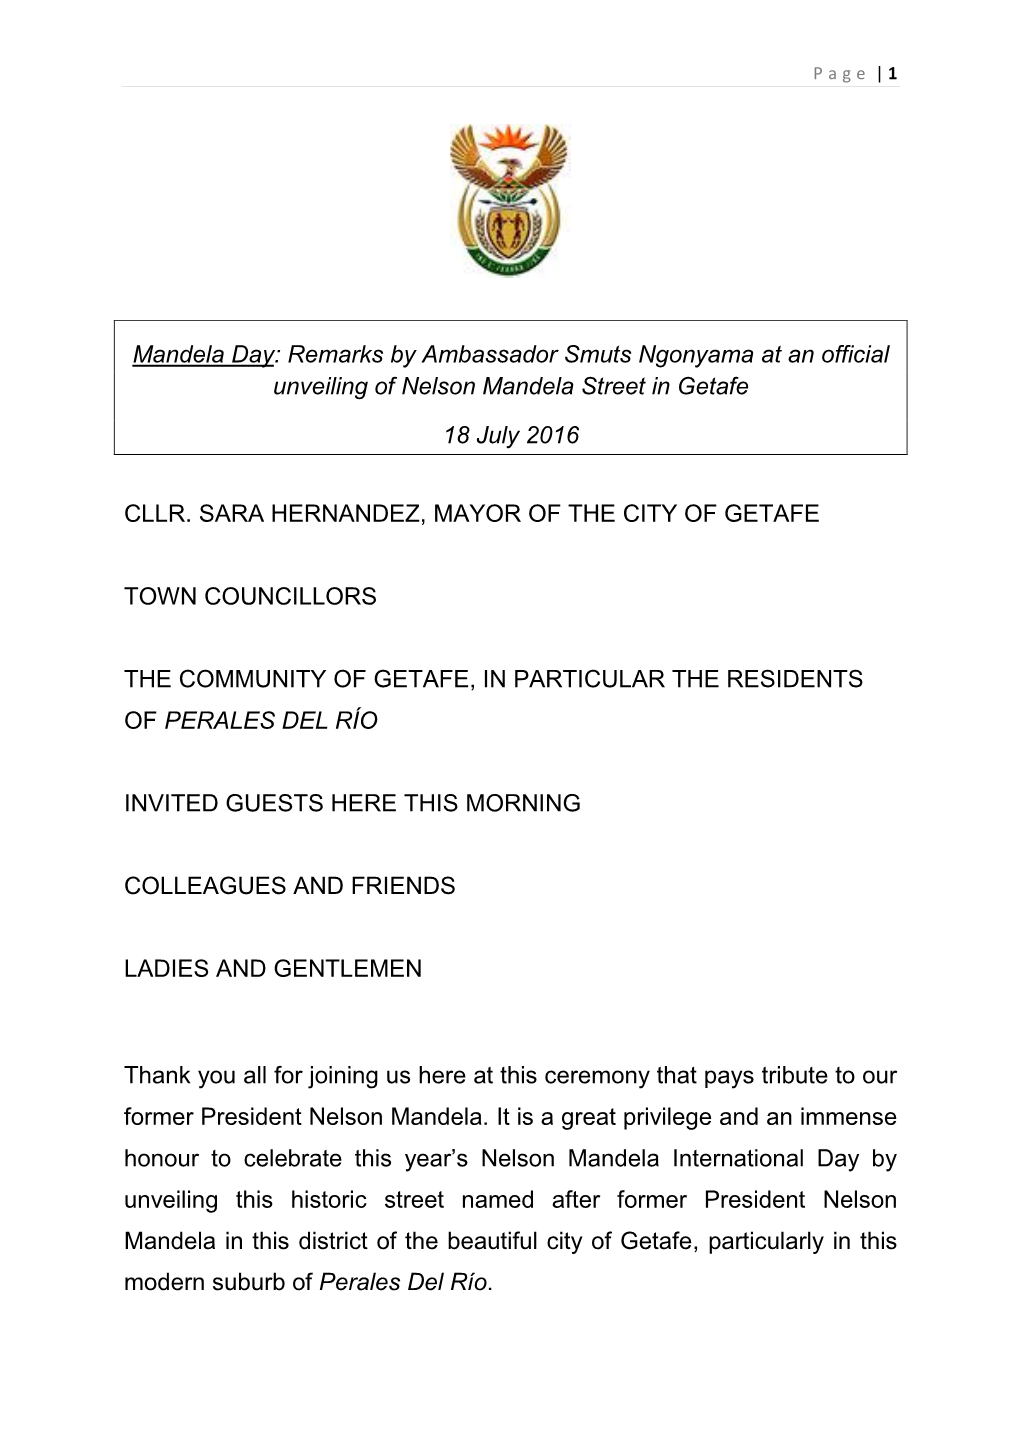 Mandela Day: Remarks by Ambassador Smuts Ngonyama at an Official Unveiling of Nelson Mandela Street in Getafe